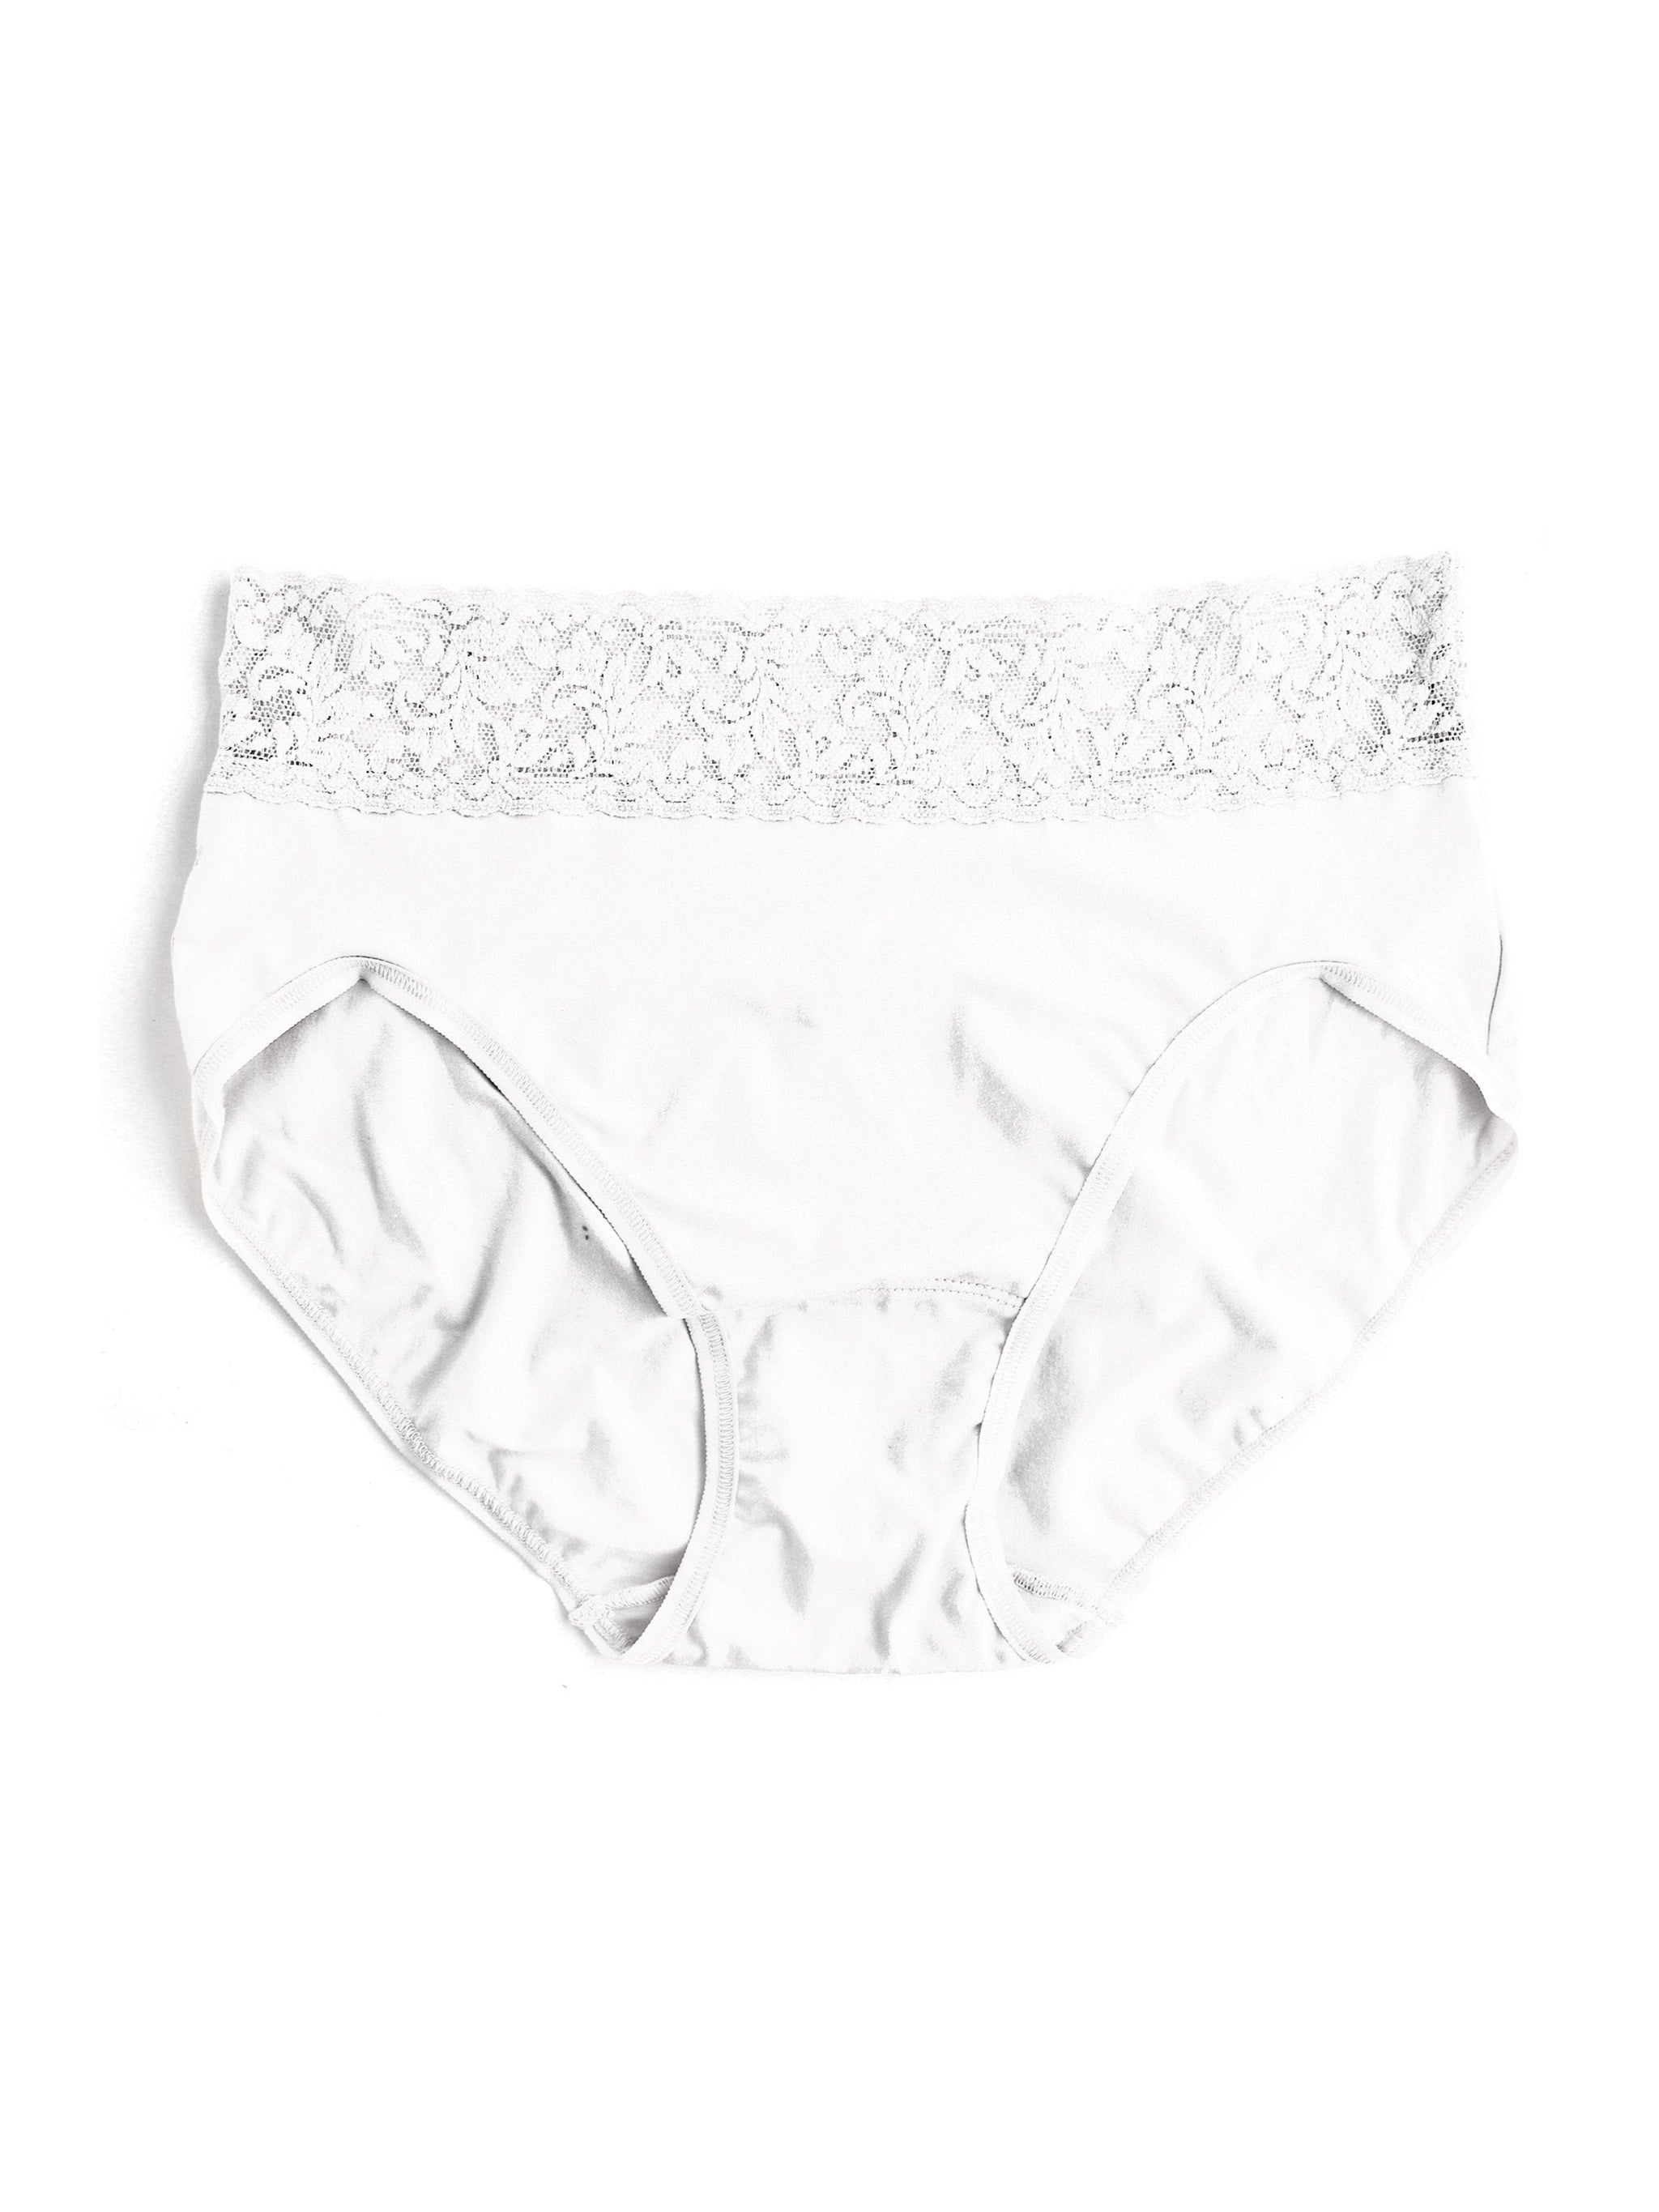 OLIKEME Womens Underwear Full Coverage Ladies Briefs Cotton Paties